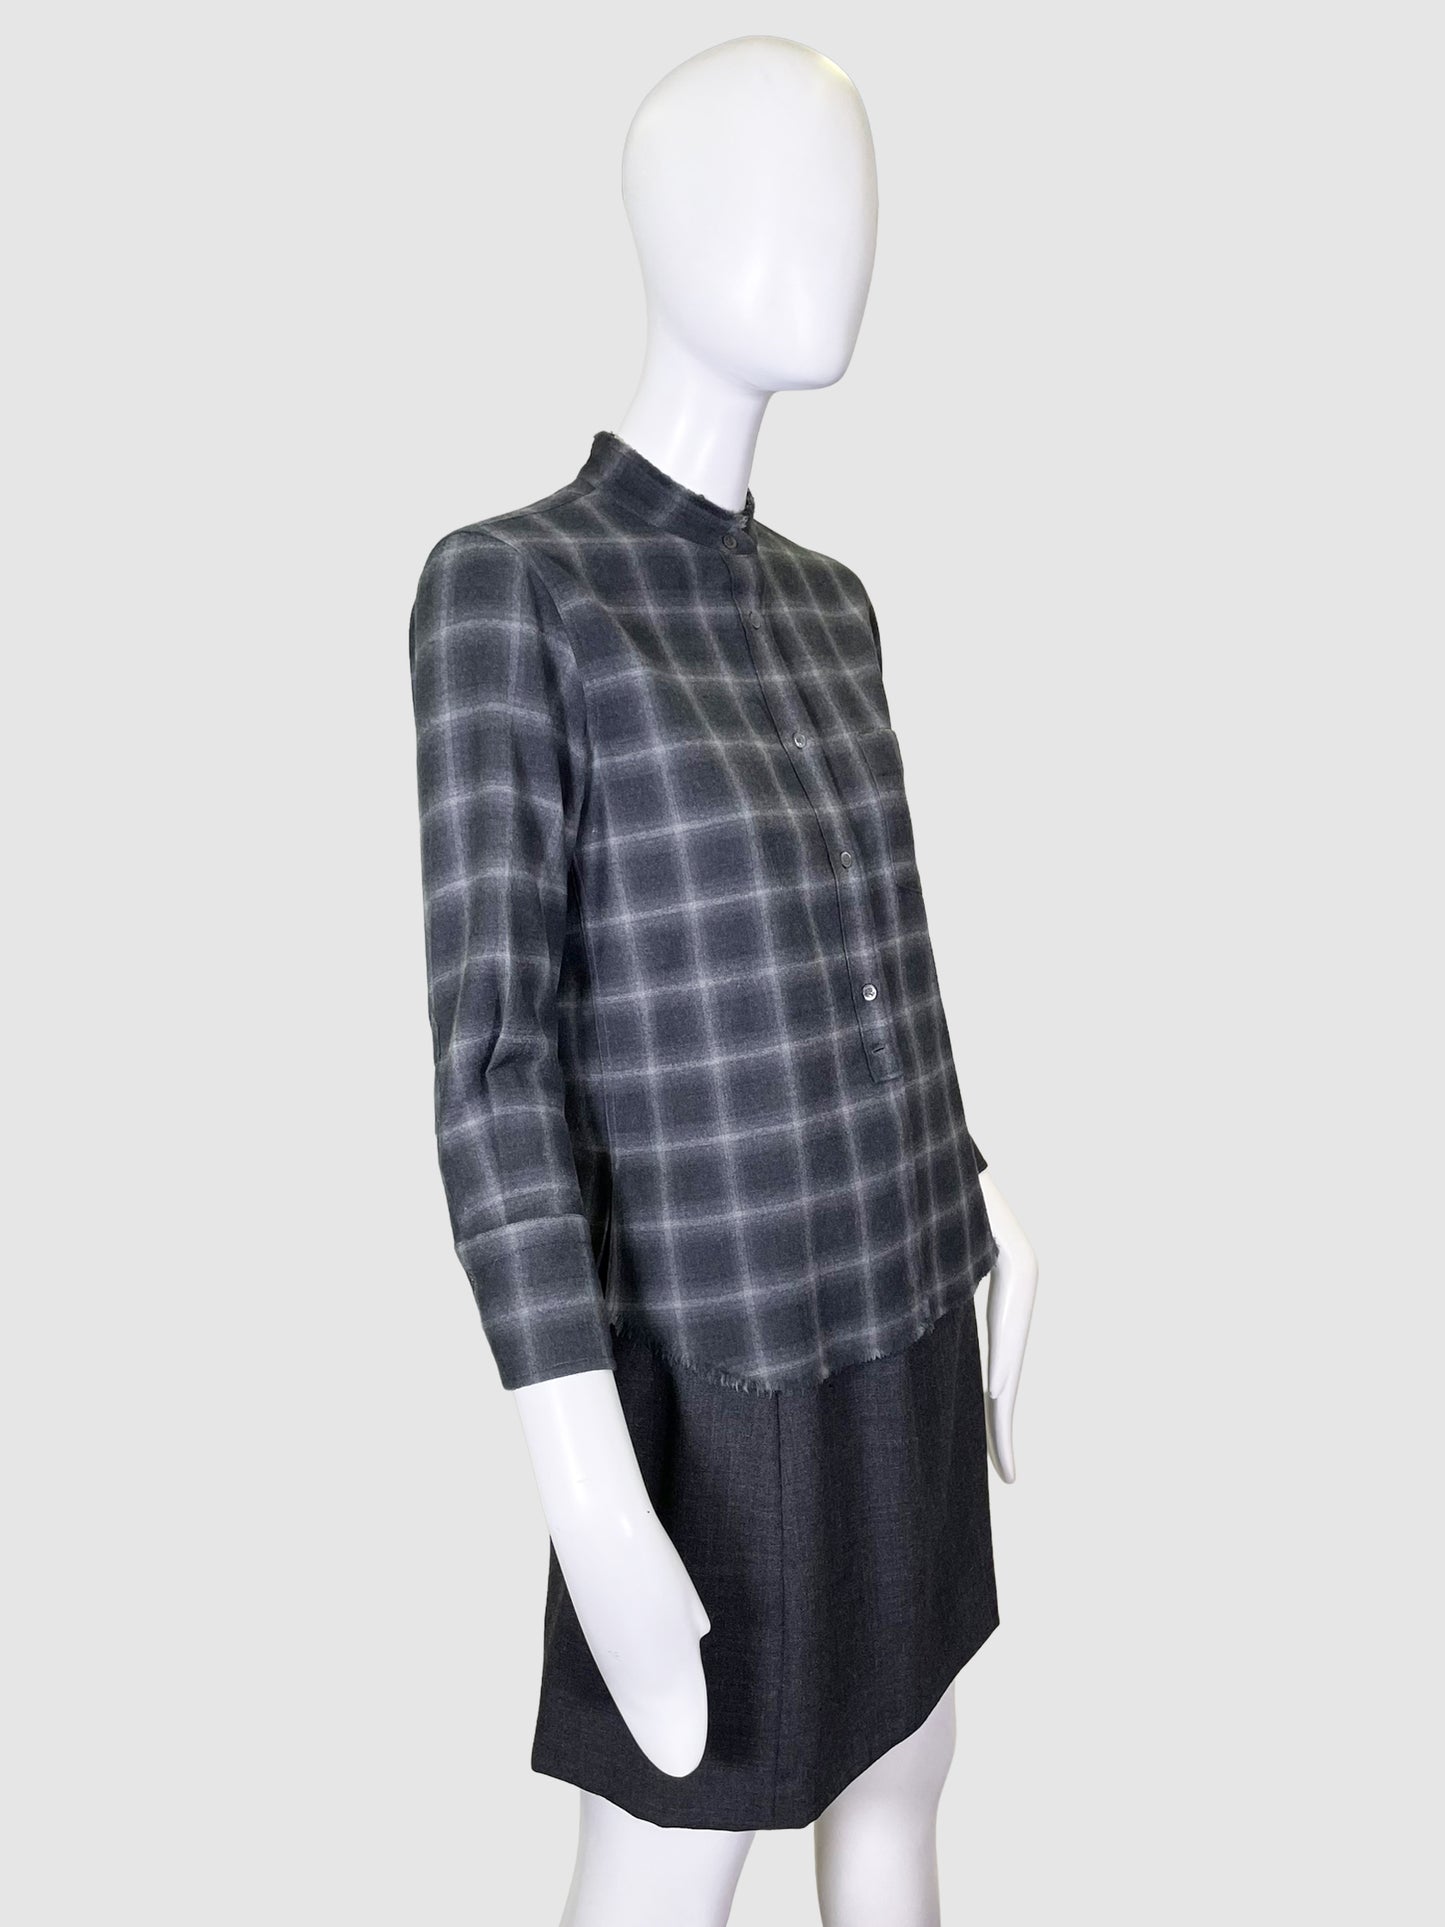 Helmut Lang Grey Plaid Wool Blouse - Size S